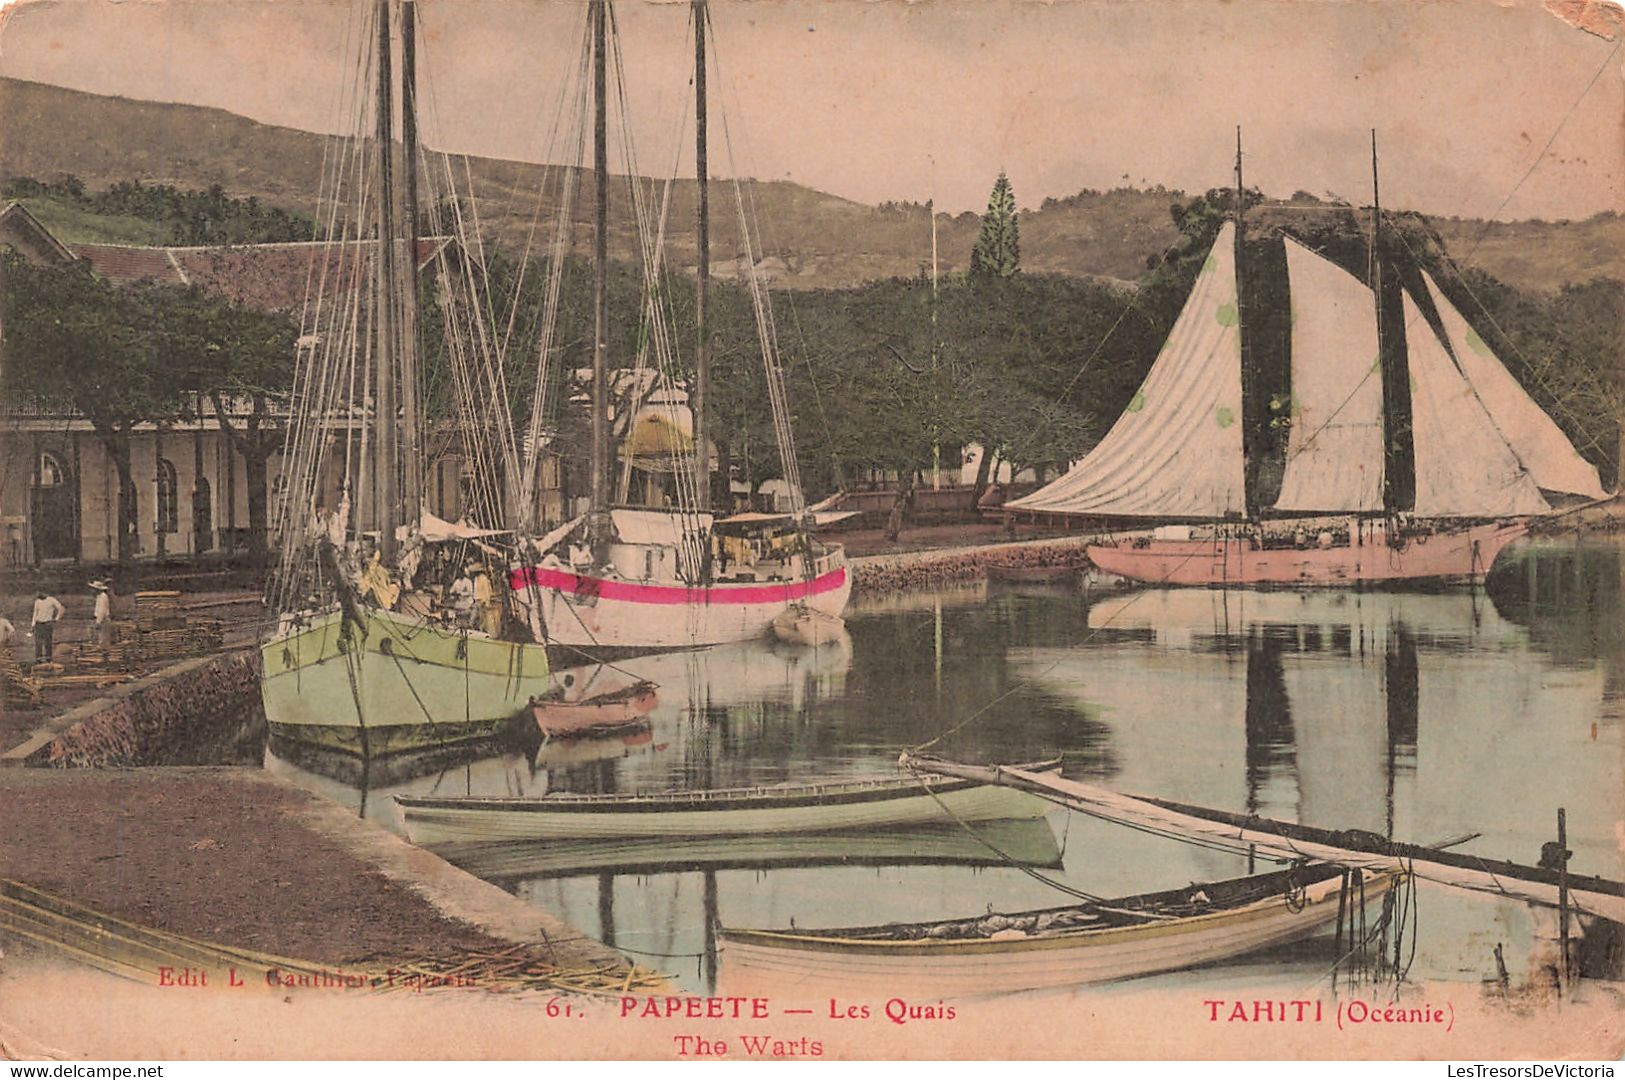 CPA - Tahiti - Papeete - Les Quais - The Warfs - Edit. L.Gauthier - Bateau - Barque - Animé - Colorisé - Rare - Tahiti